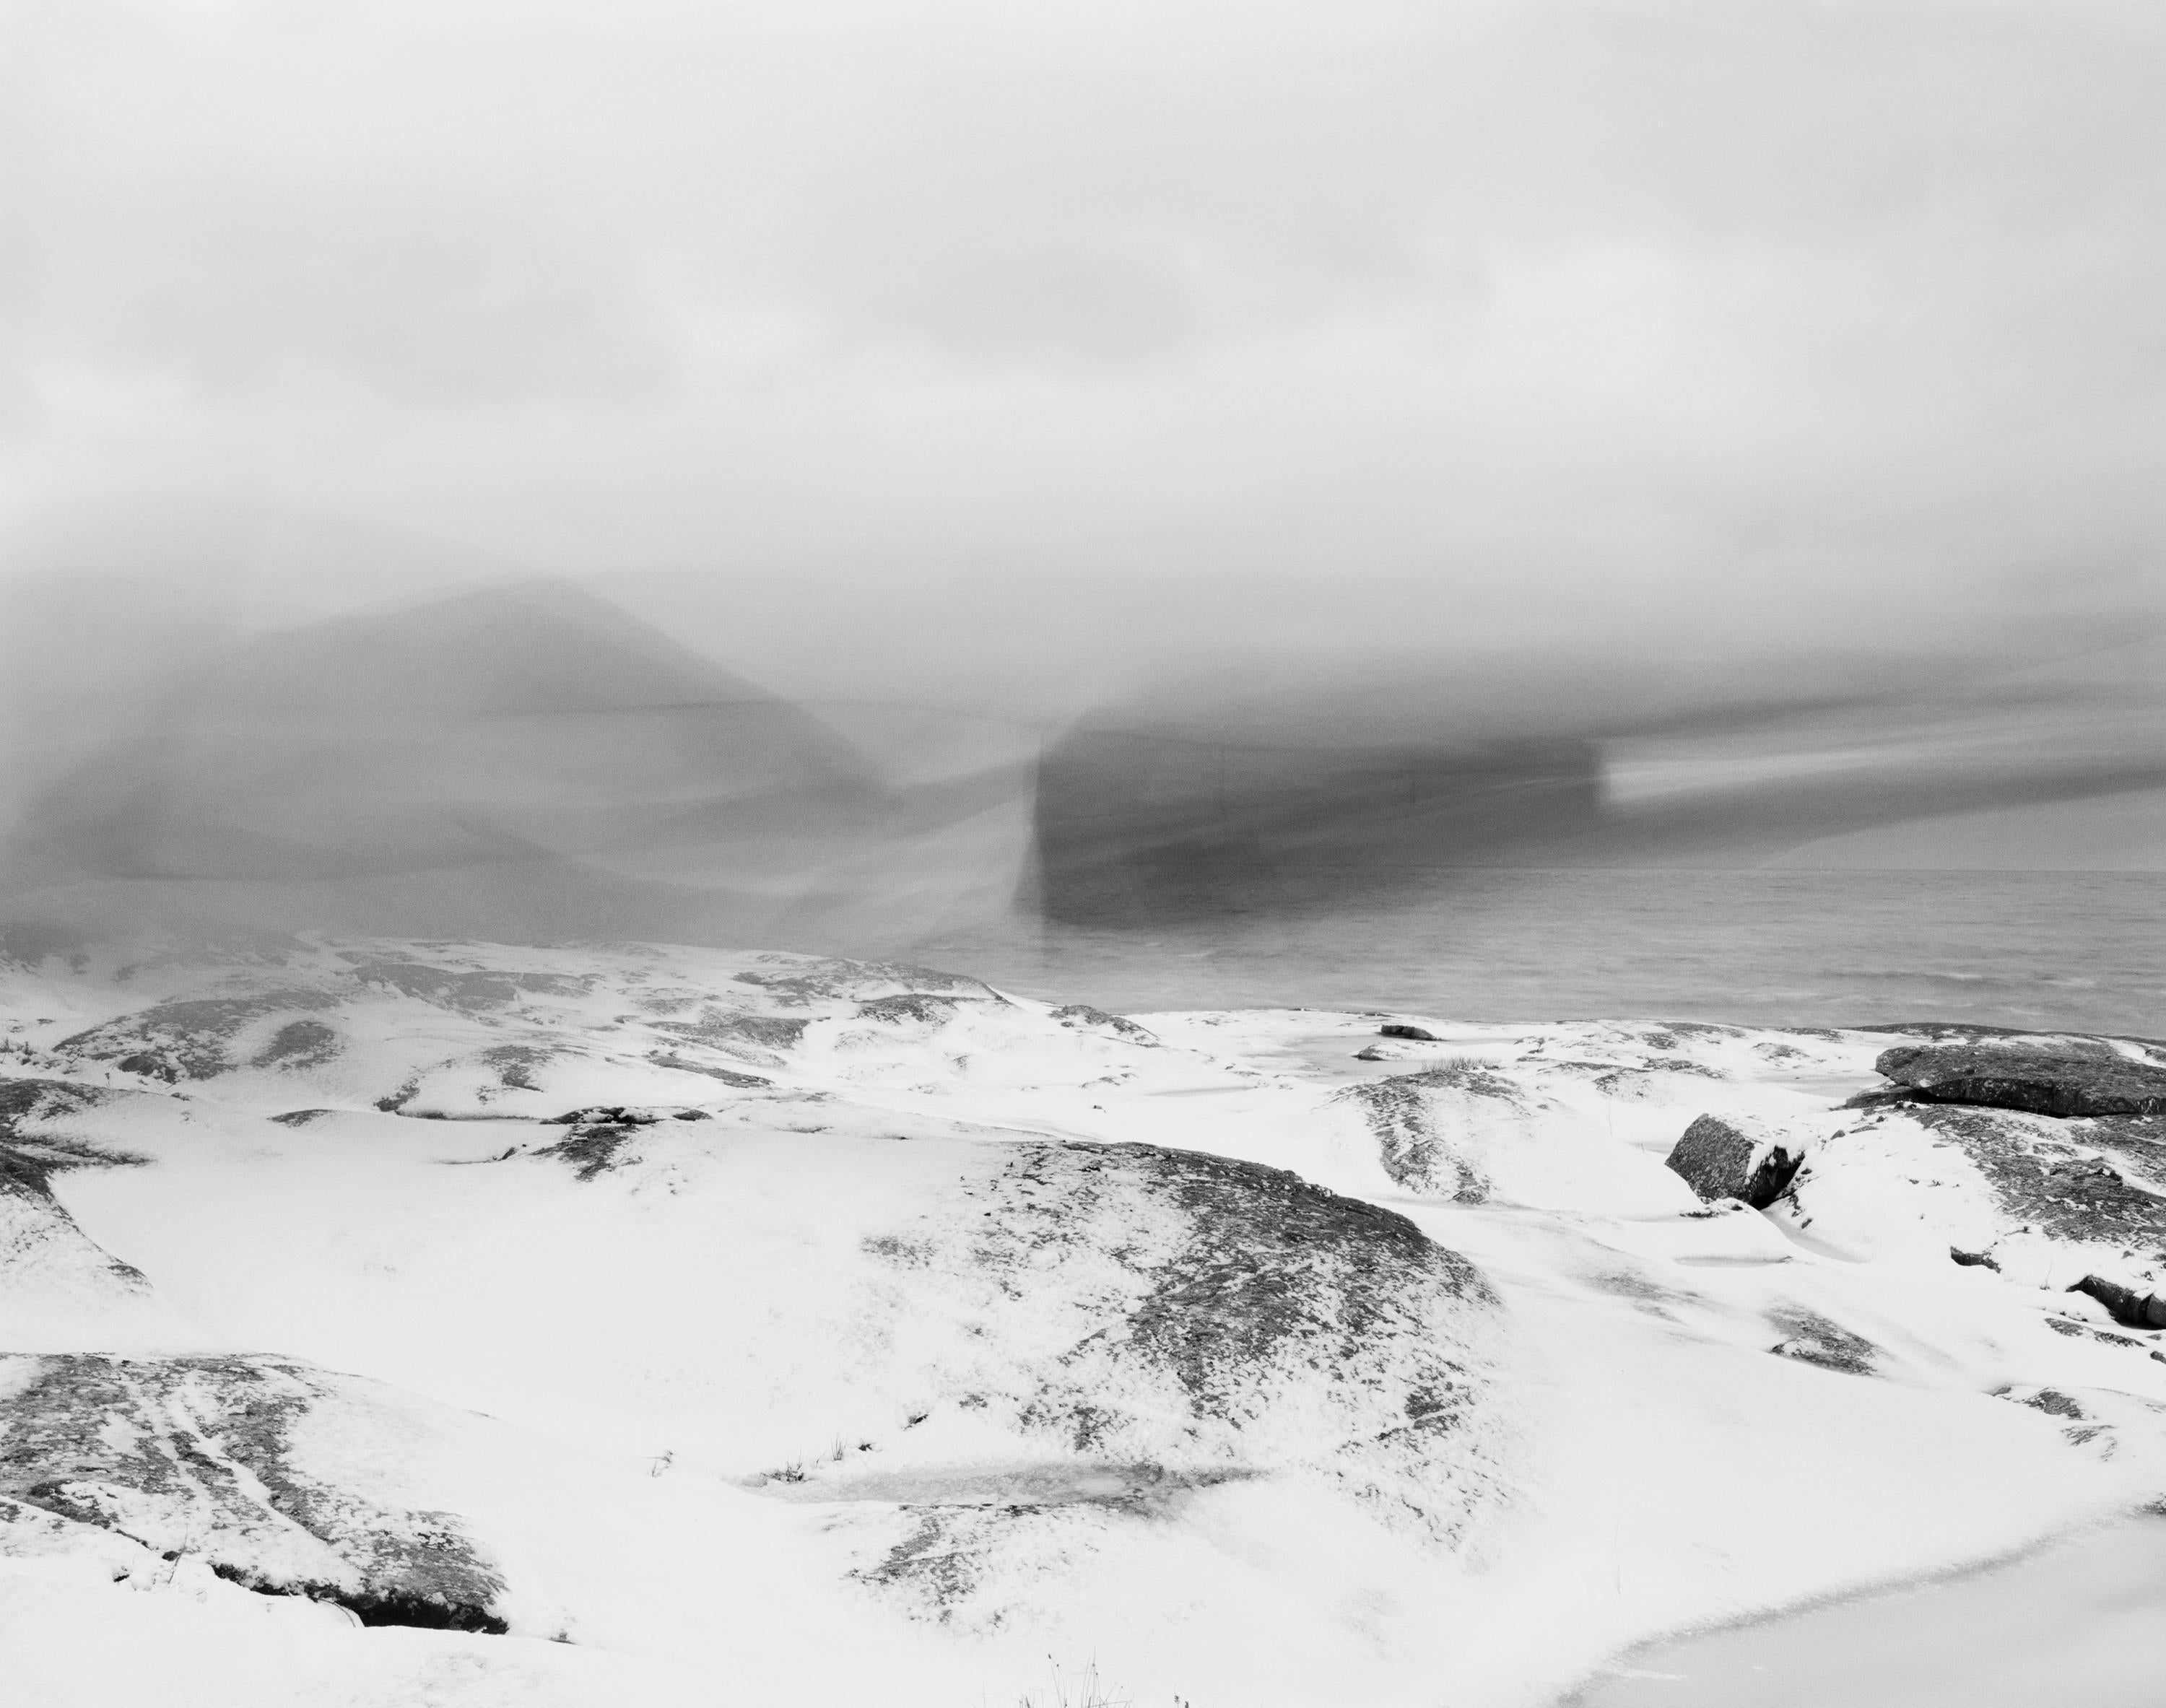 Ole Brodersen Landscape Photograph - String, Cloth, and Kite 01 - black and white Scandinavian landscape photographe